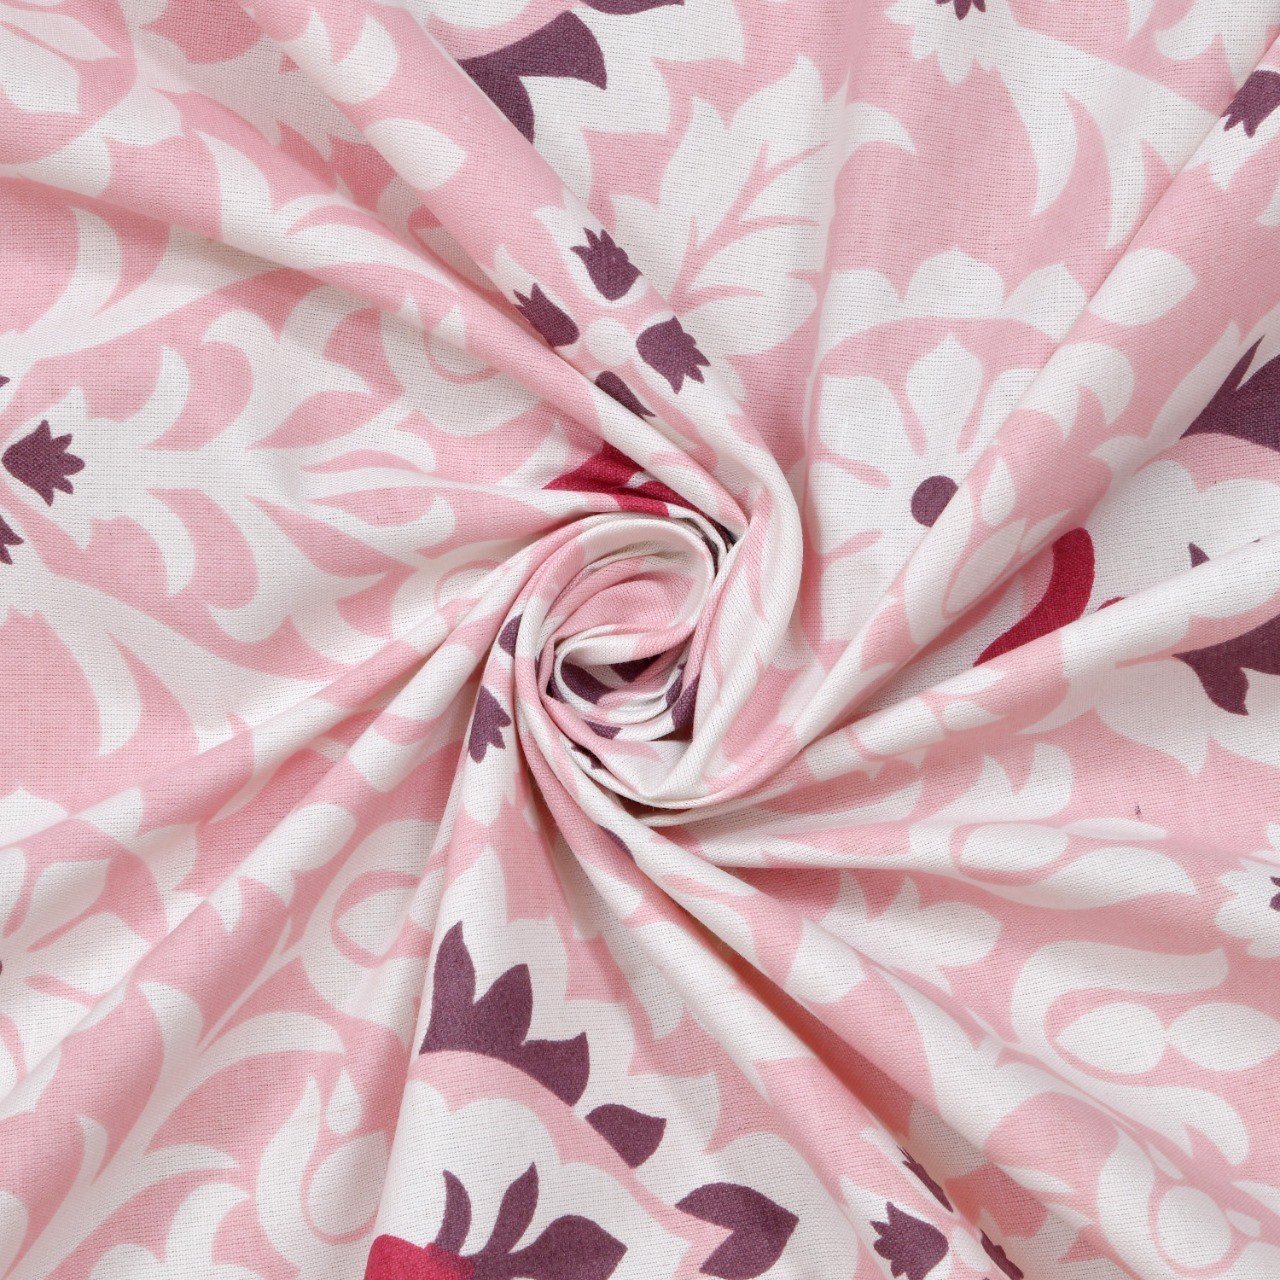 Classic Cotton Pink Damask Bedsheet